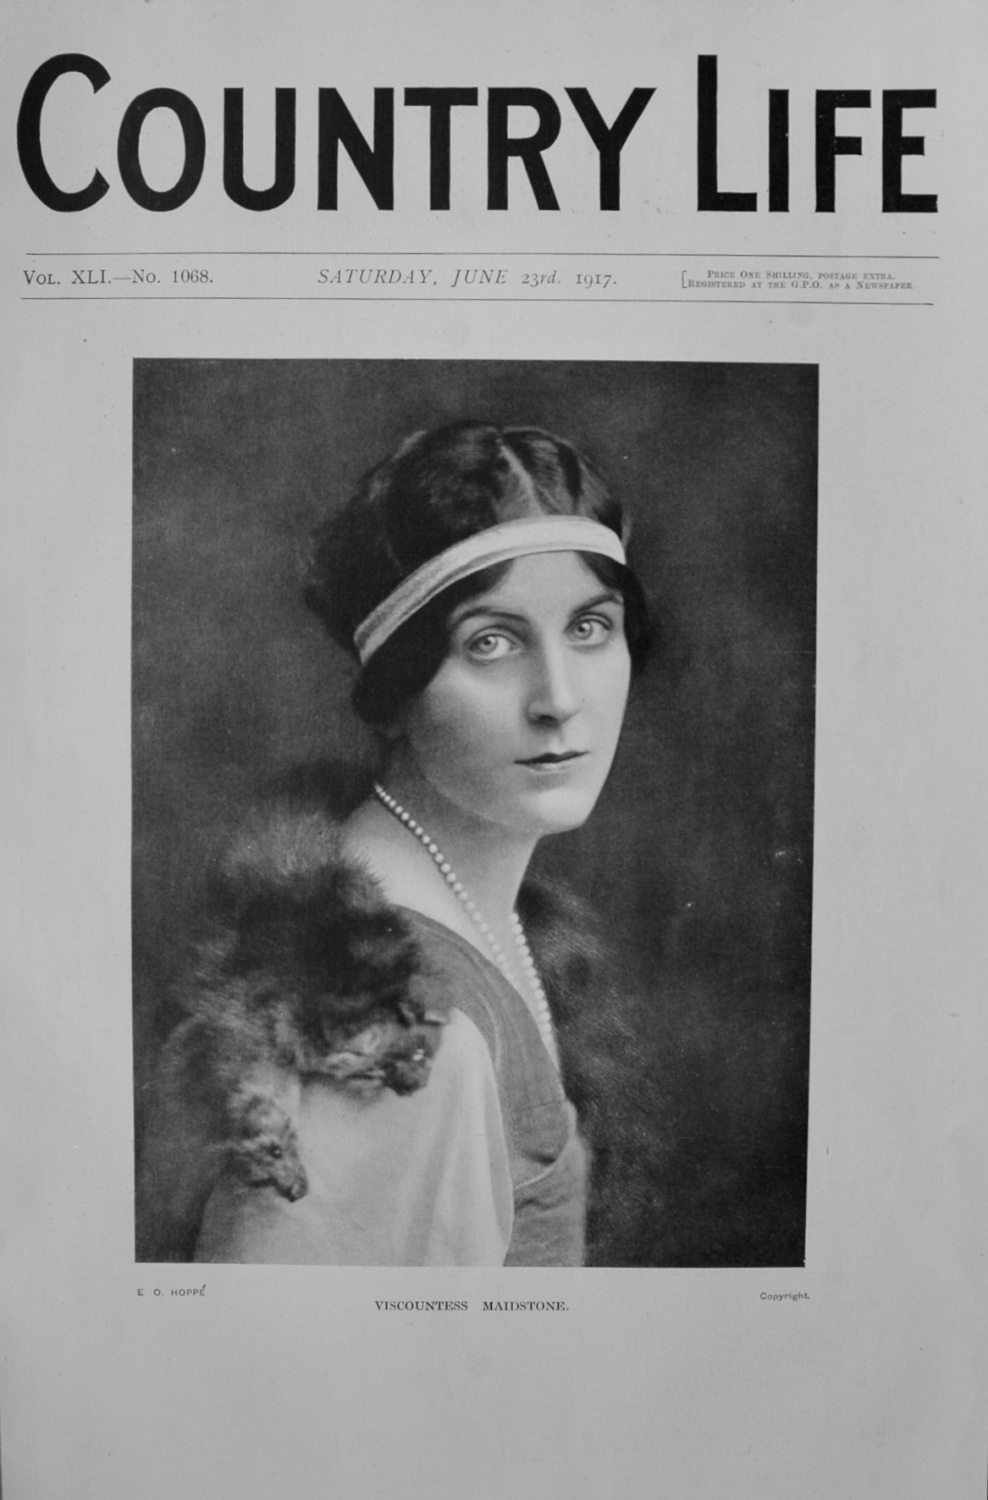 Country Life - Viscountess Maidstone 1917